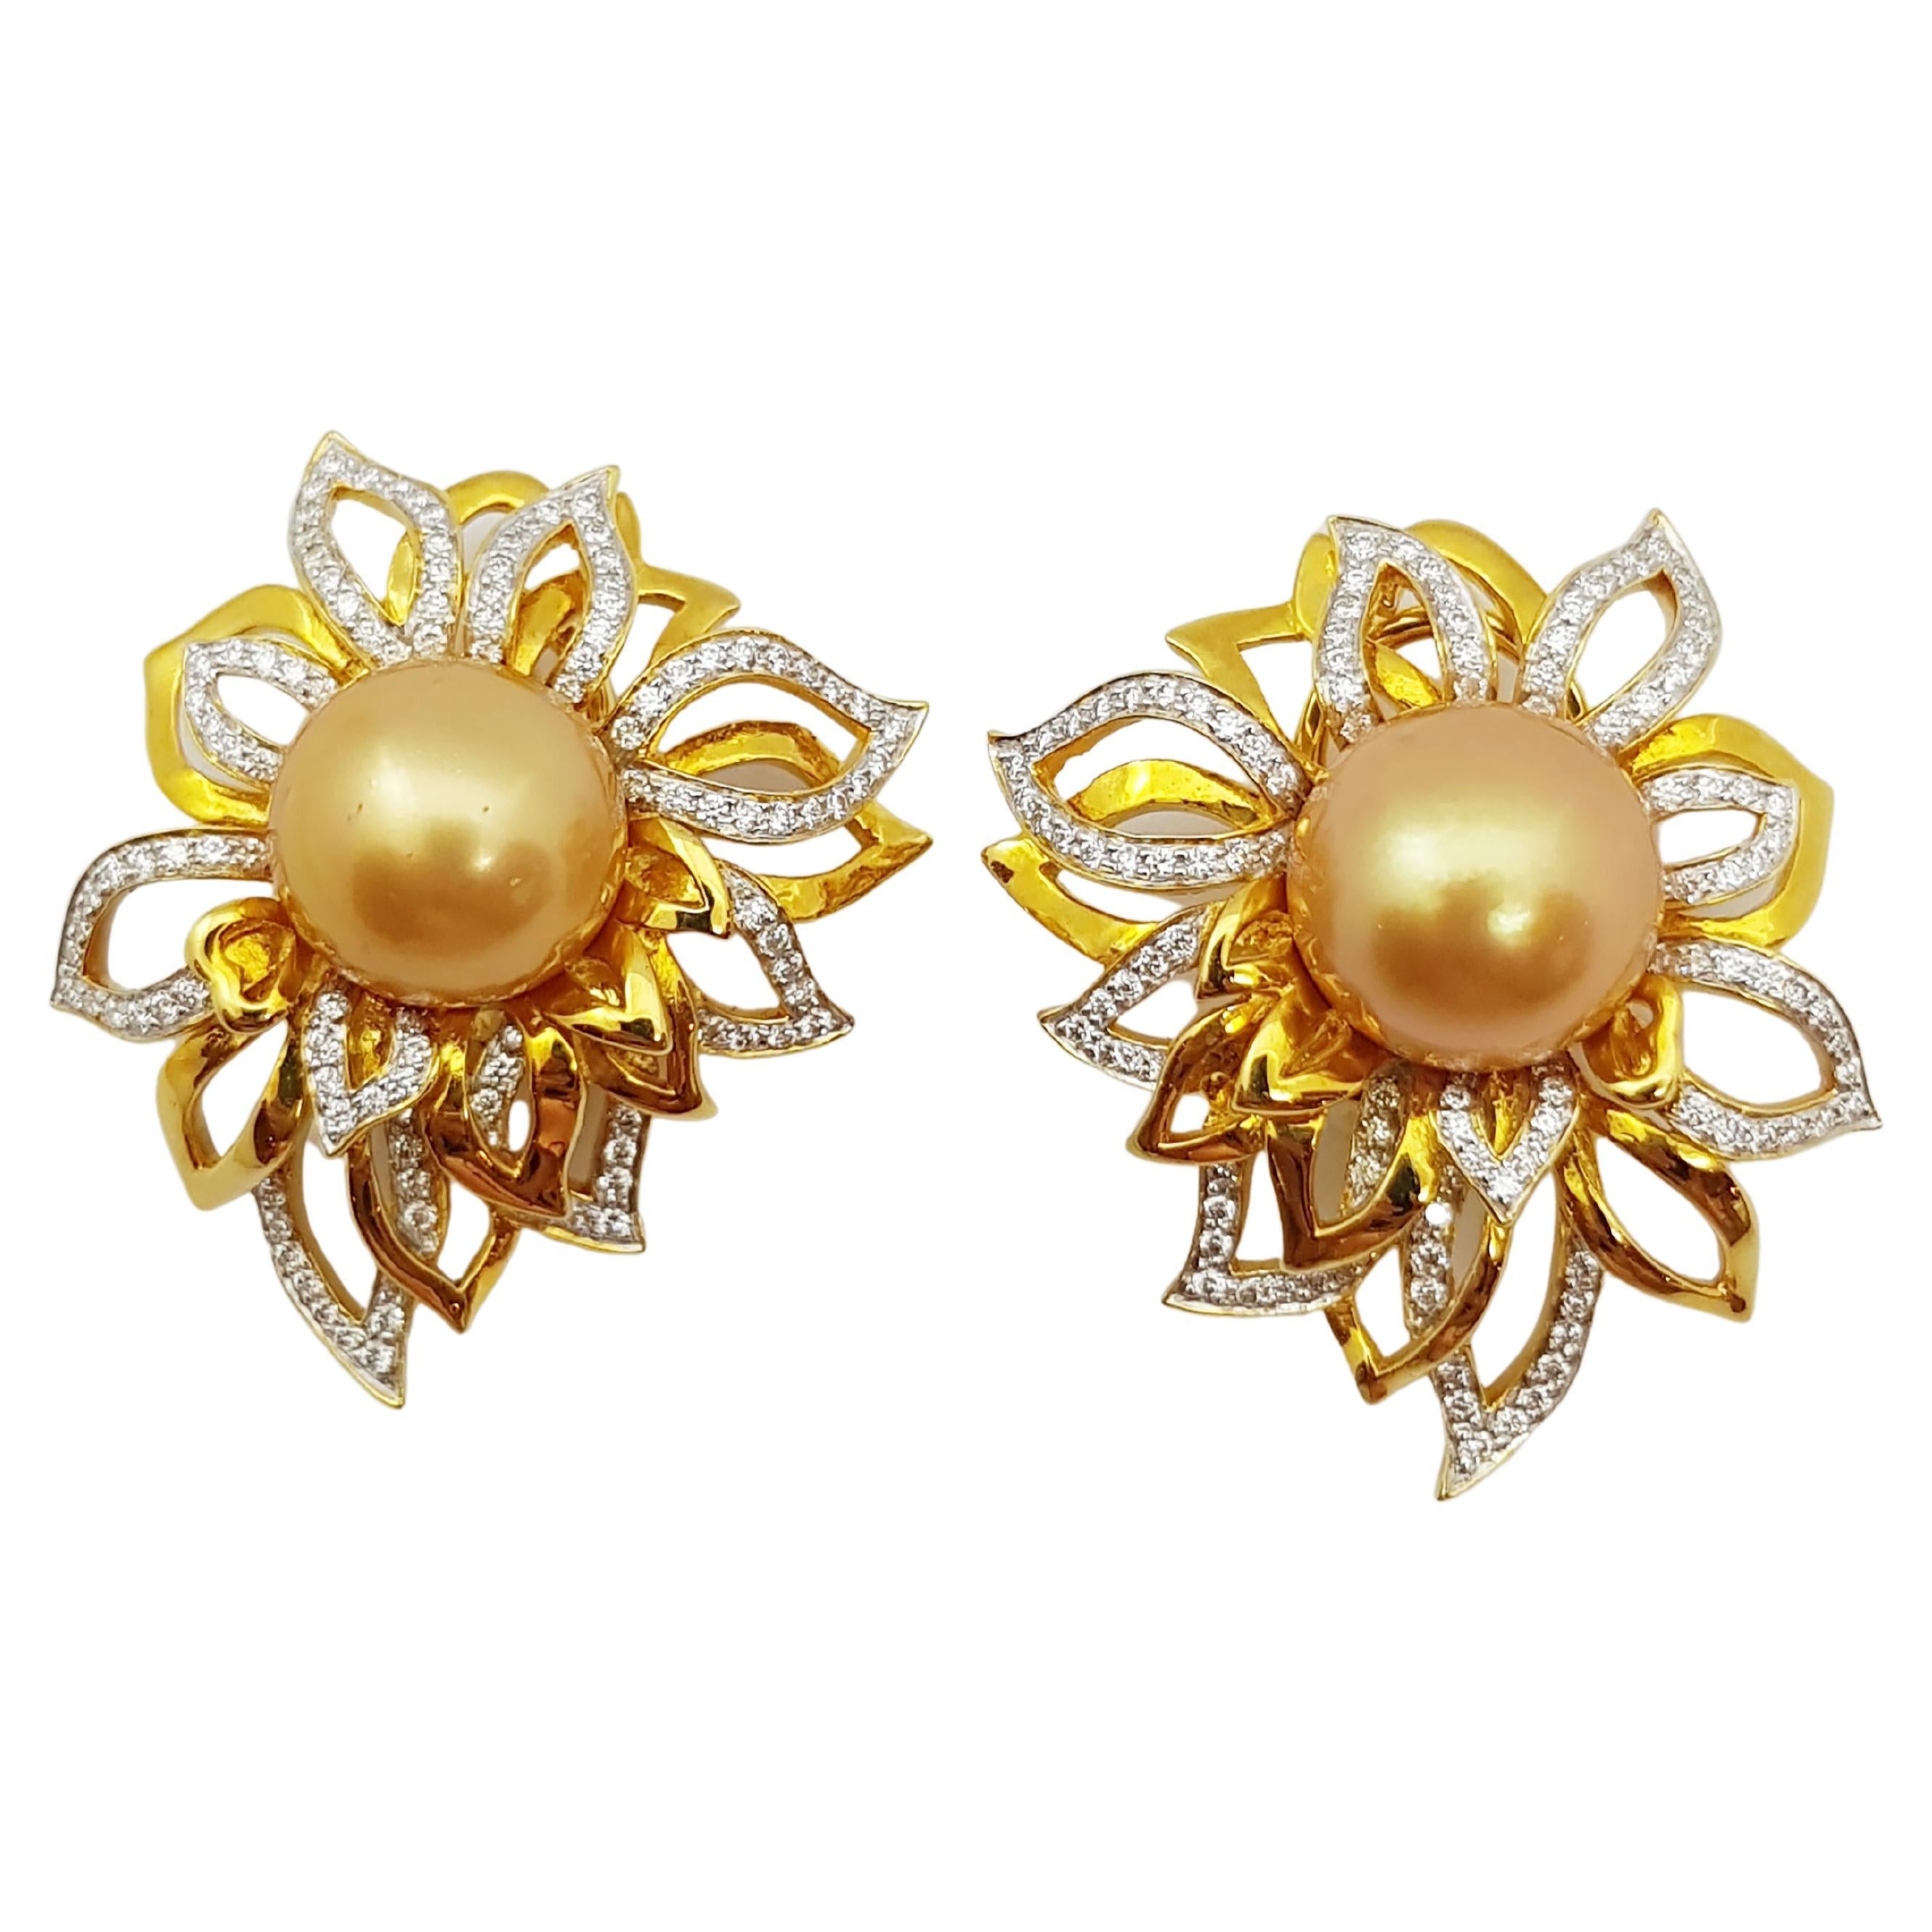 Golden South Sea Pearl with Diamond Flower Earrings Set in 18 Karat Gold For Sale